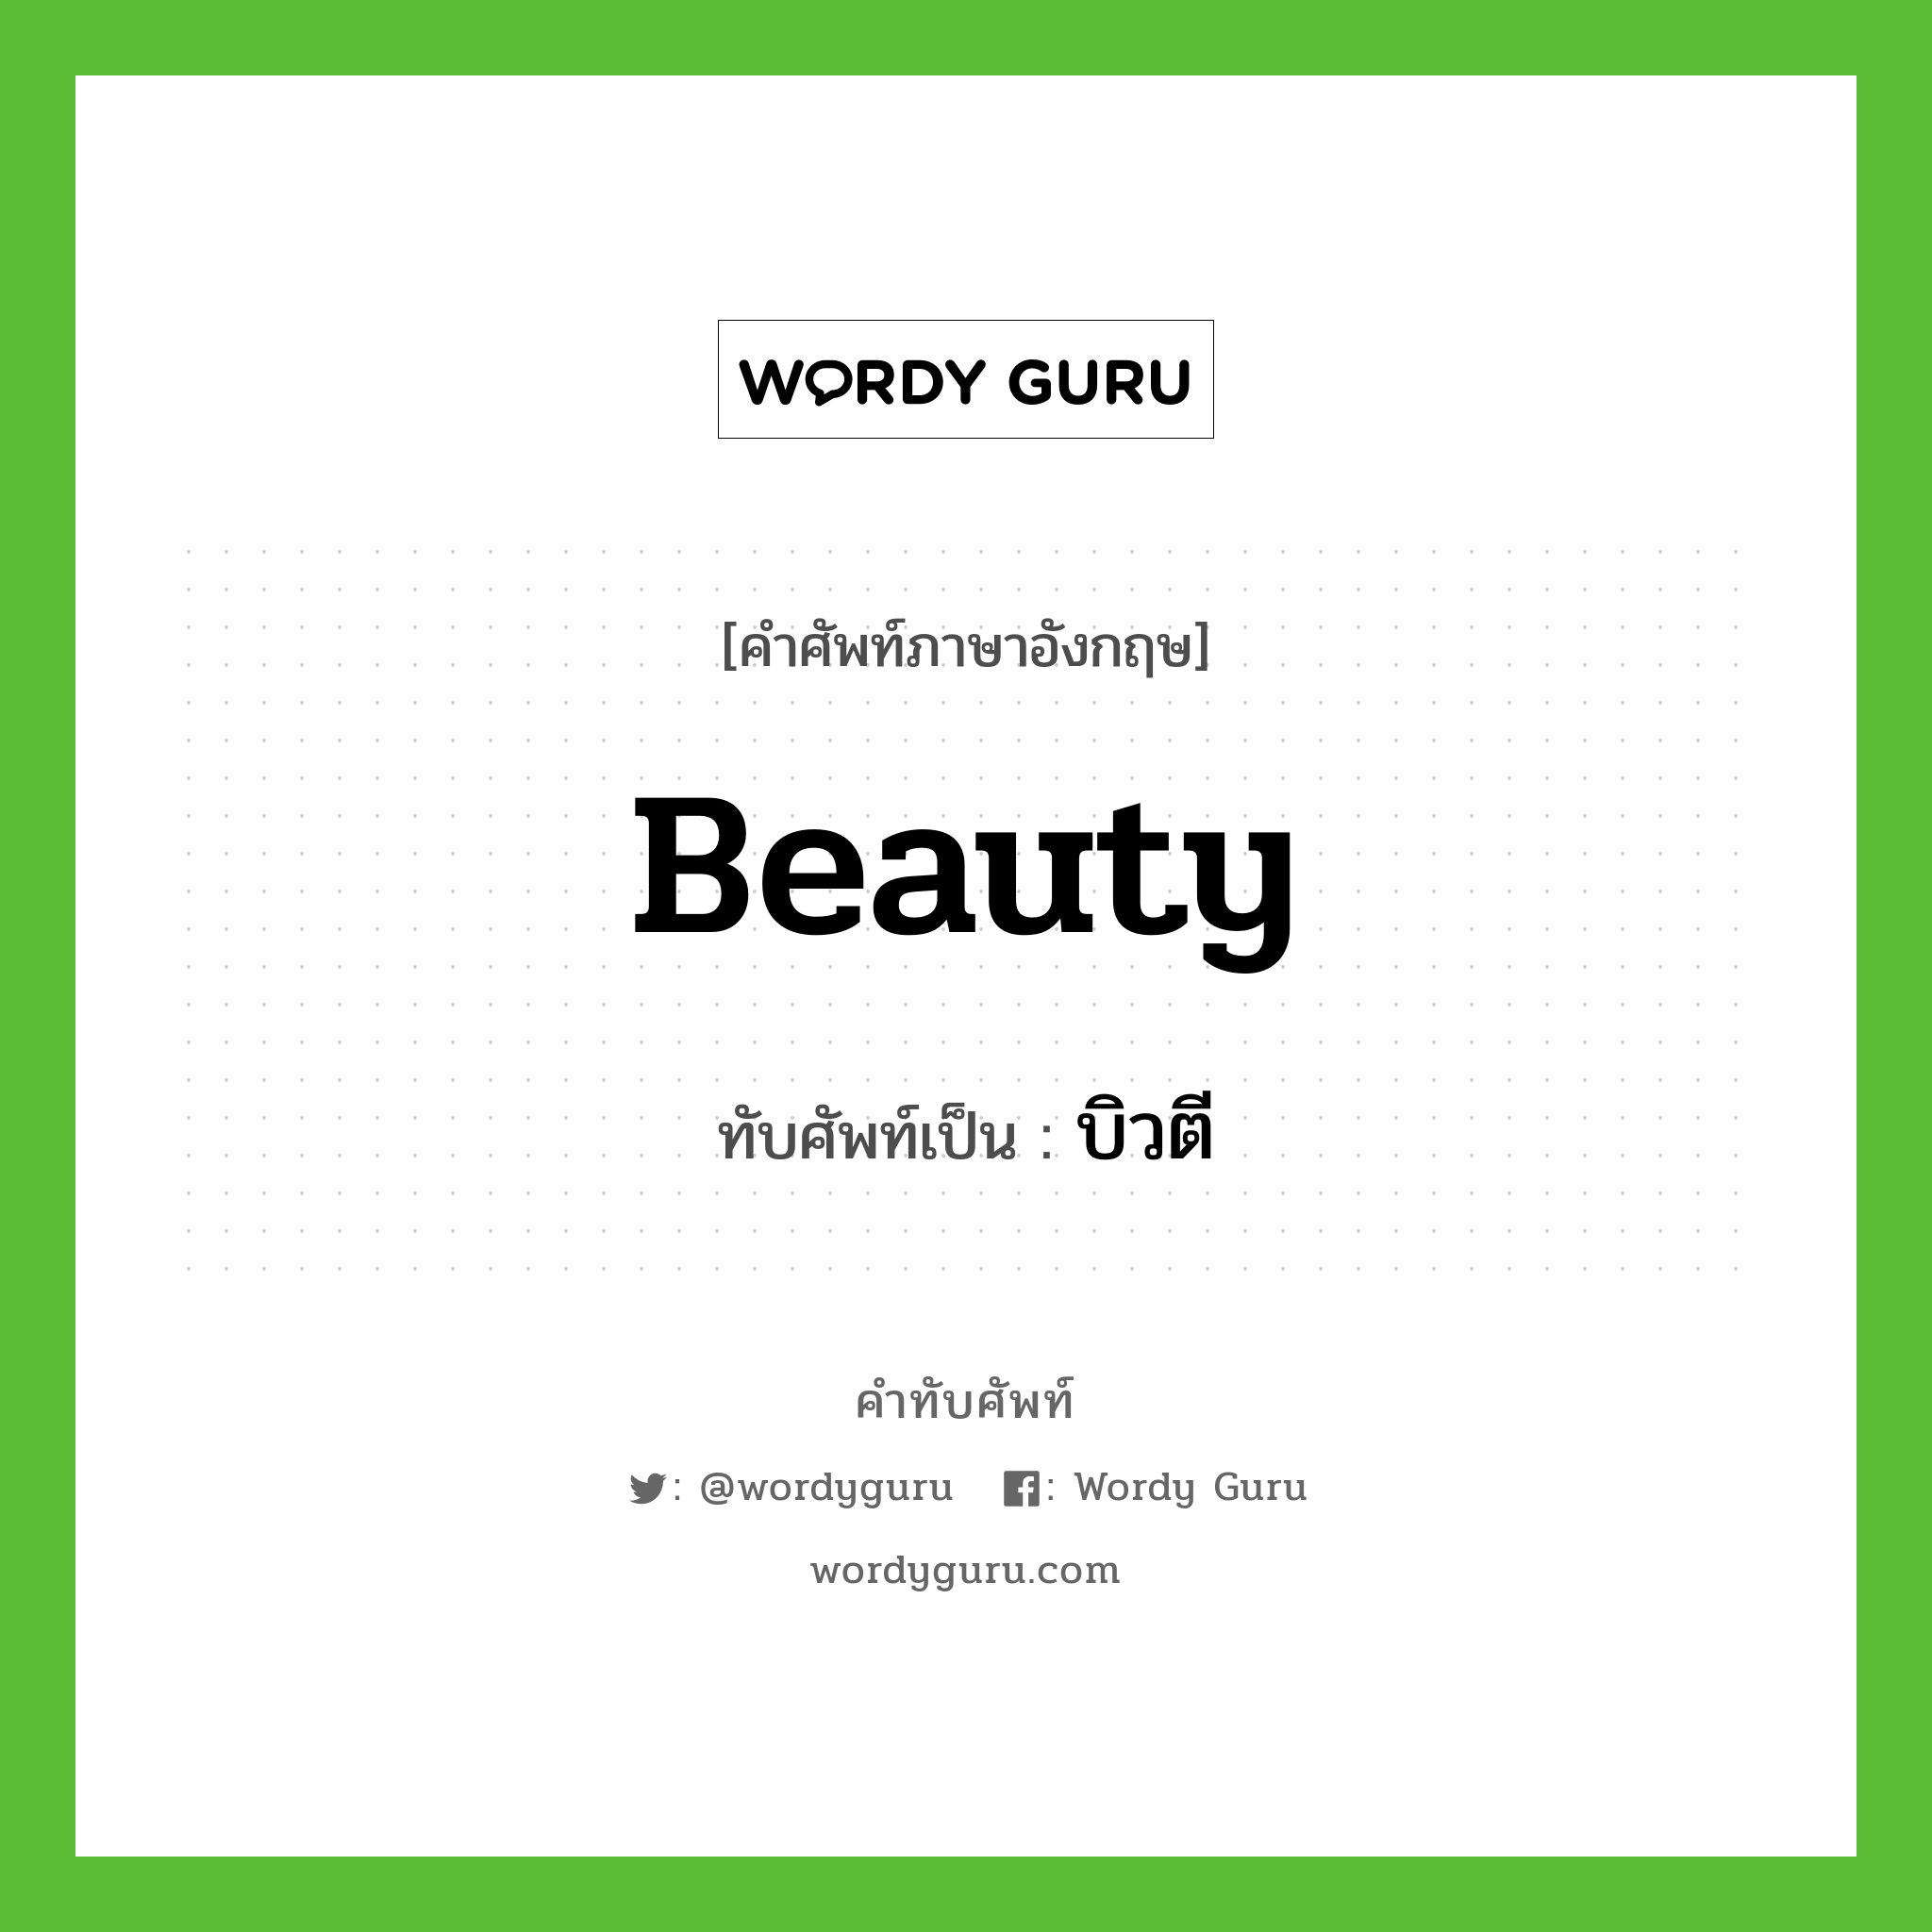 beauty เขียนเป็นคำไทยว่าอะไร?, คำศัพท์ภาษาอังกฤษ beauty ทับศัพท์เป็น บิวตี